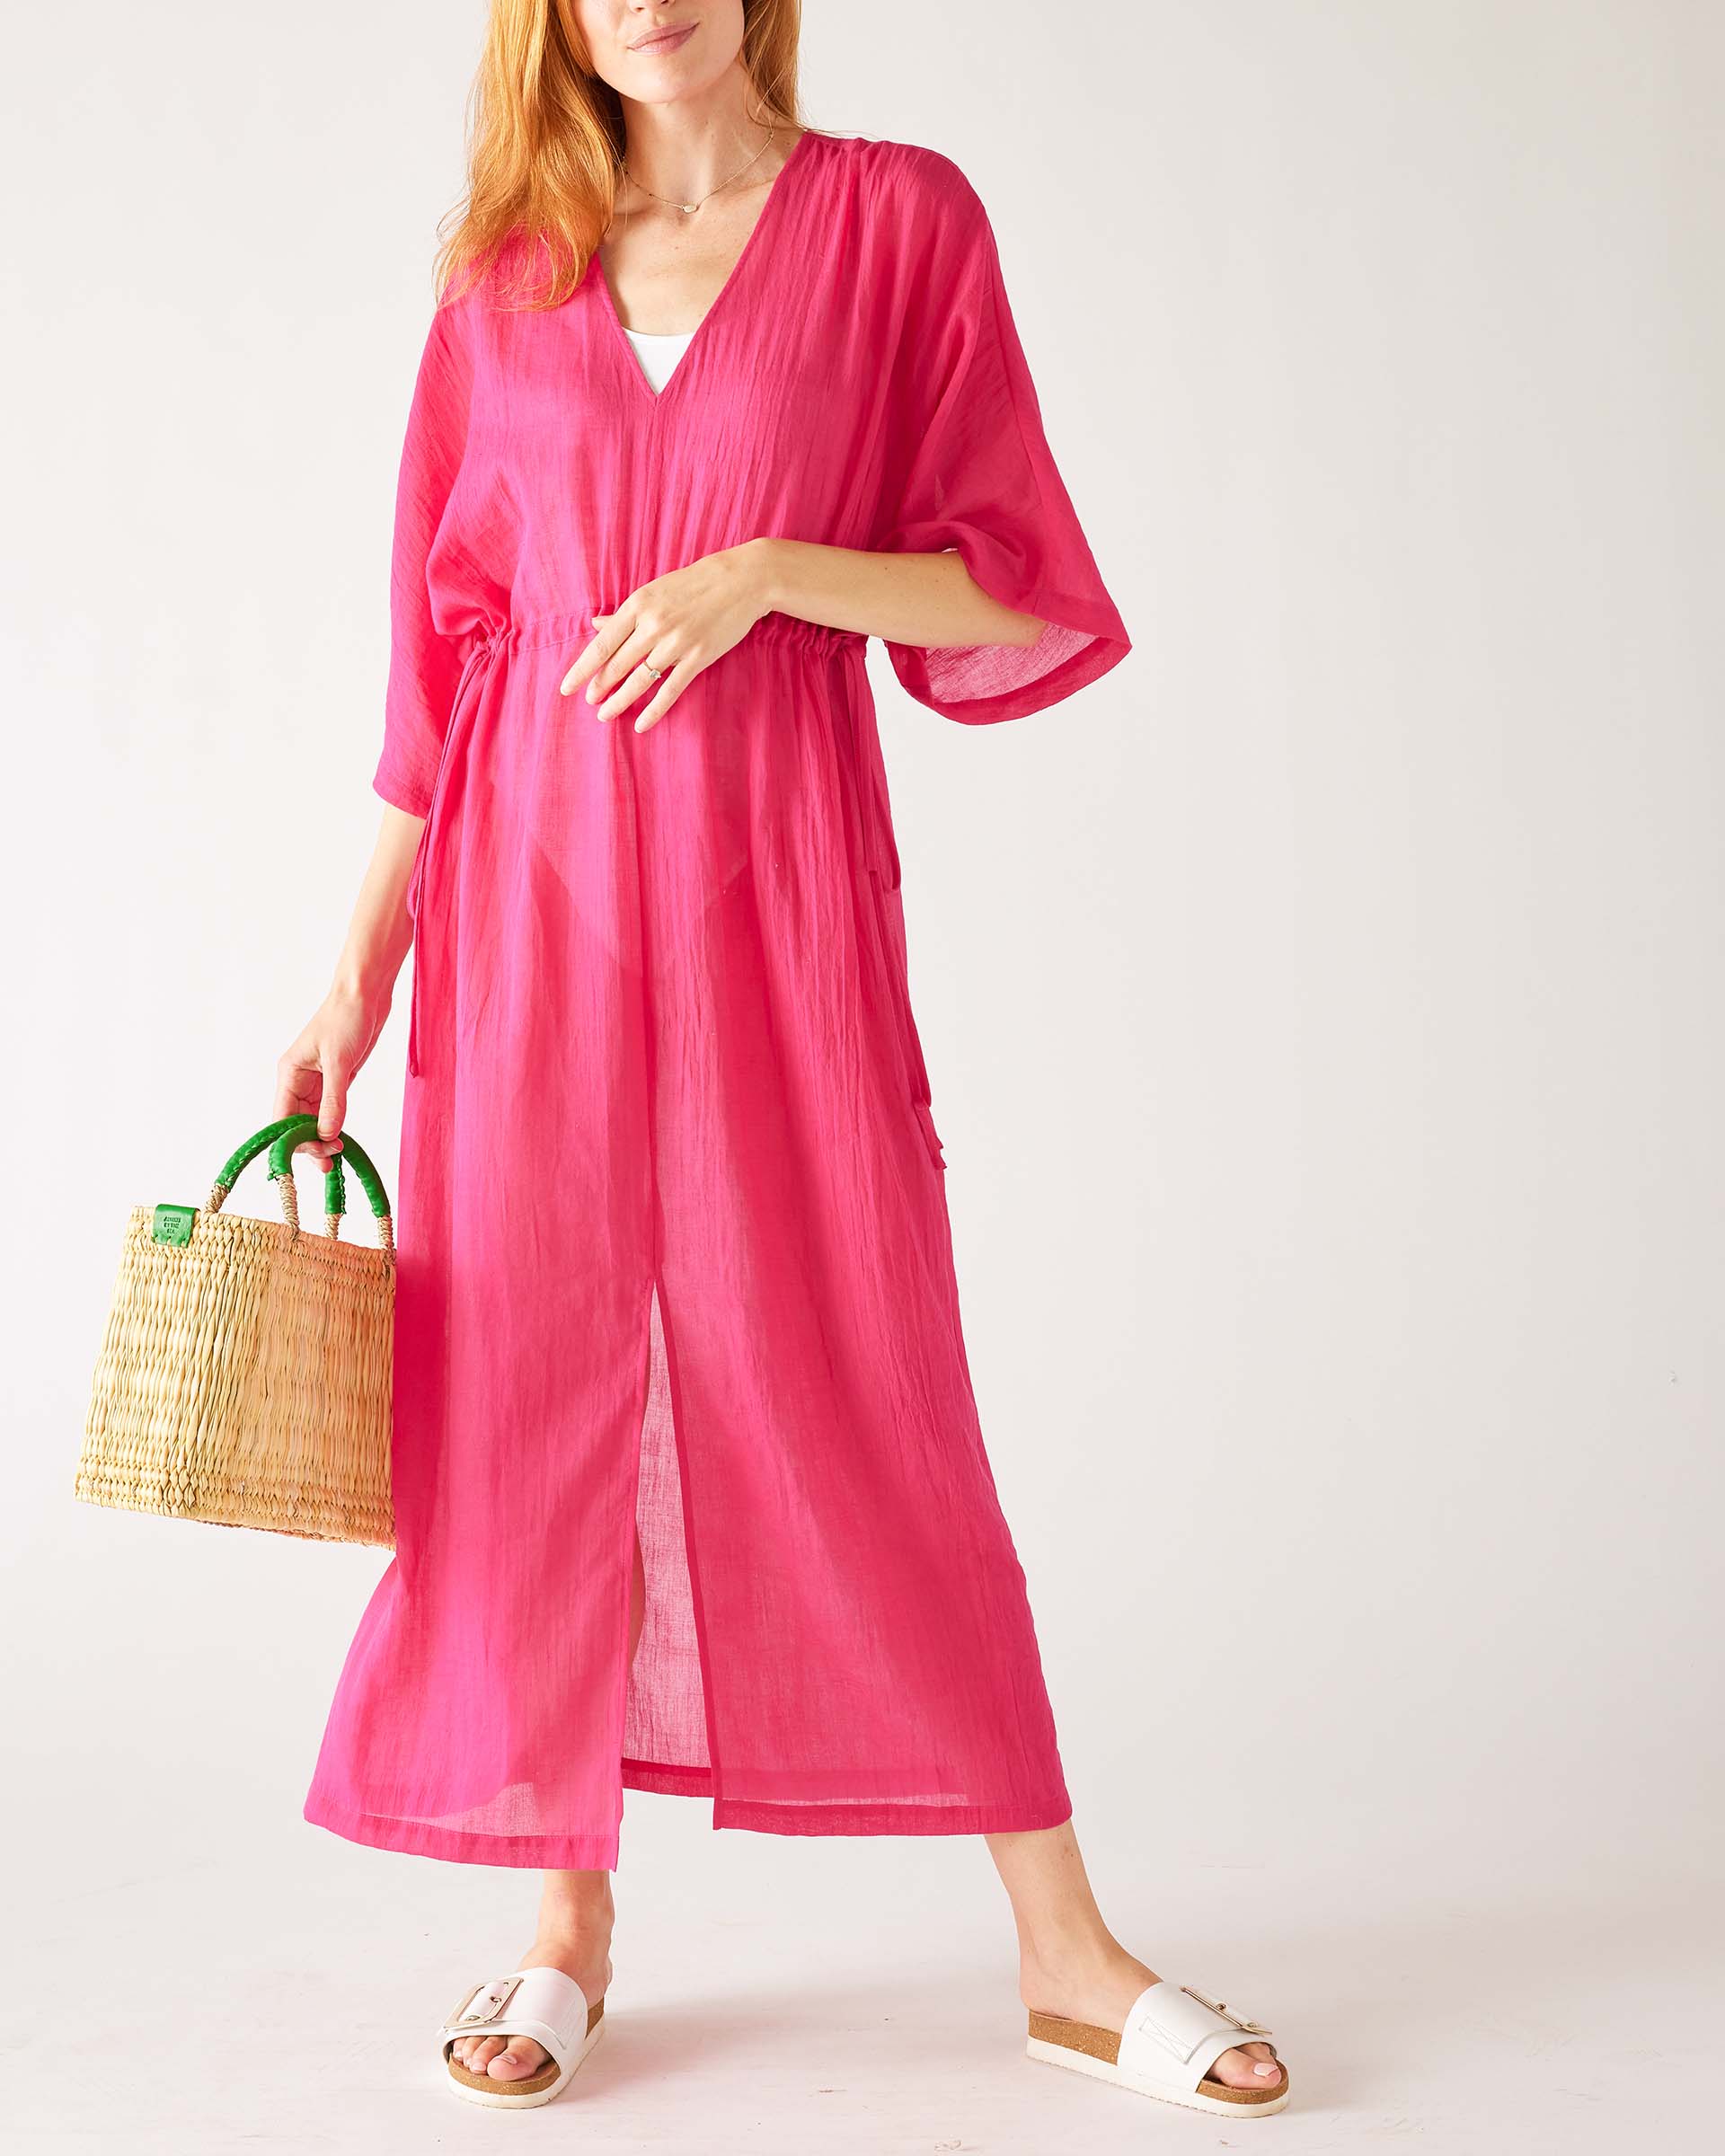 Women's Pink Lightweight Breathable Cinch Waist fron Slit Wide Elbow Length sleeves Breezy Kaftan Dress With Bag